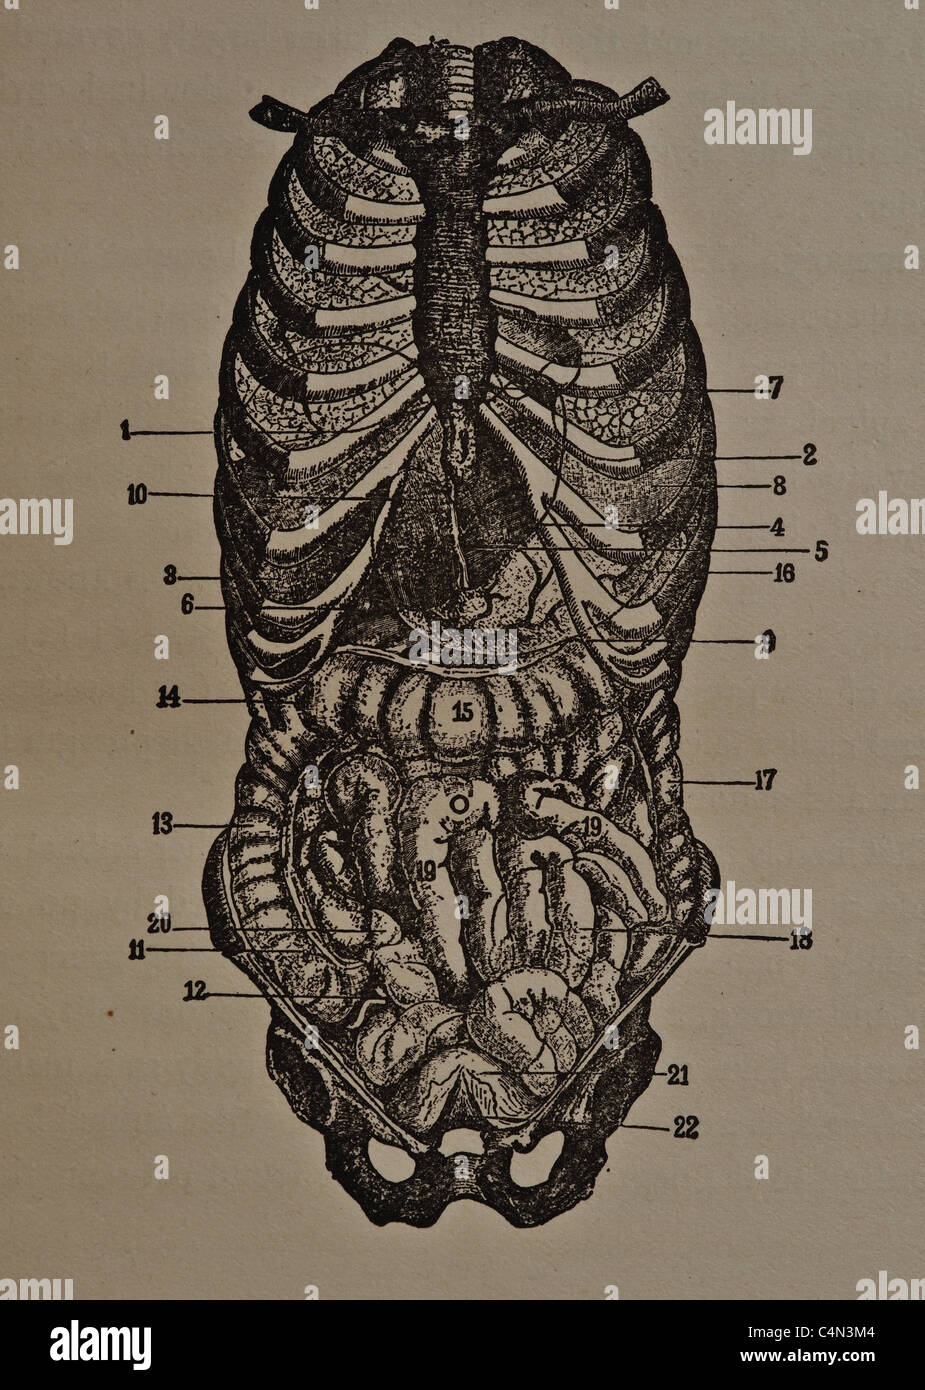 Antique medical illustration of human viscera, internal organs and the abdominal cavity. Stock Photo